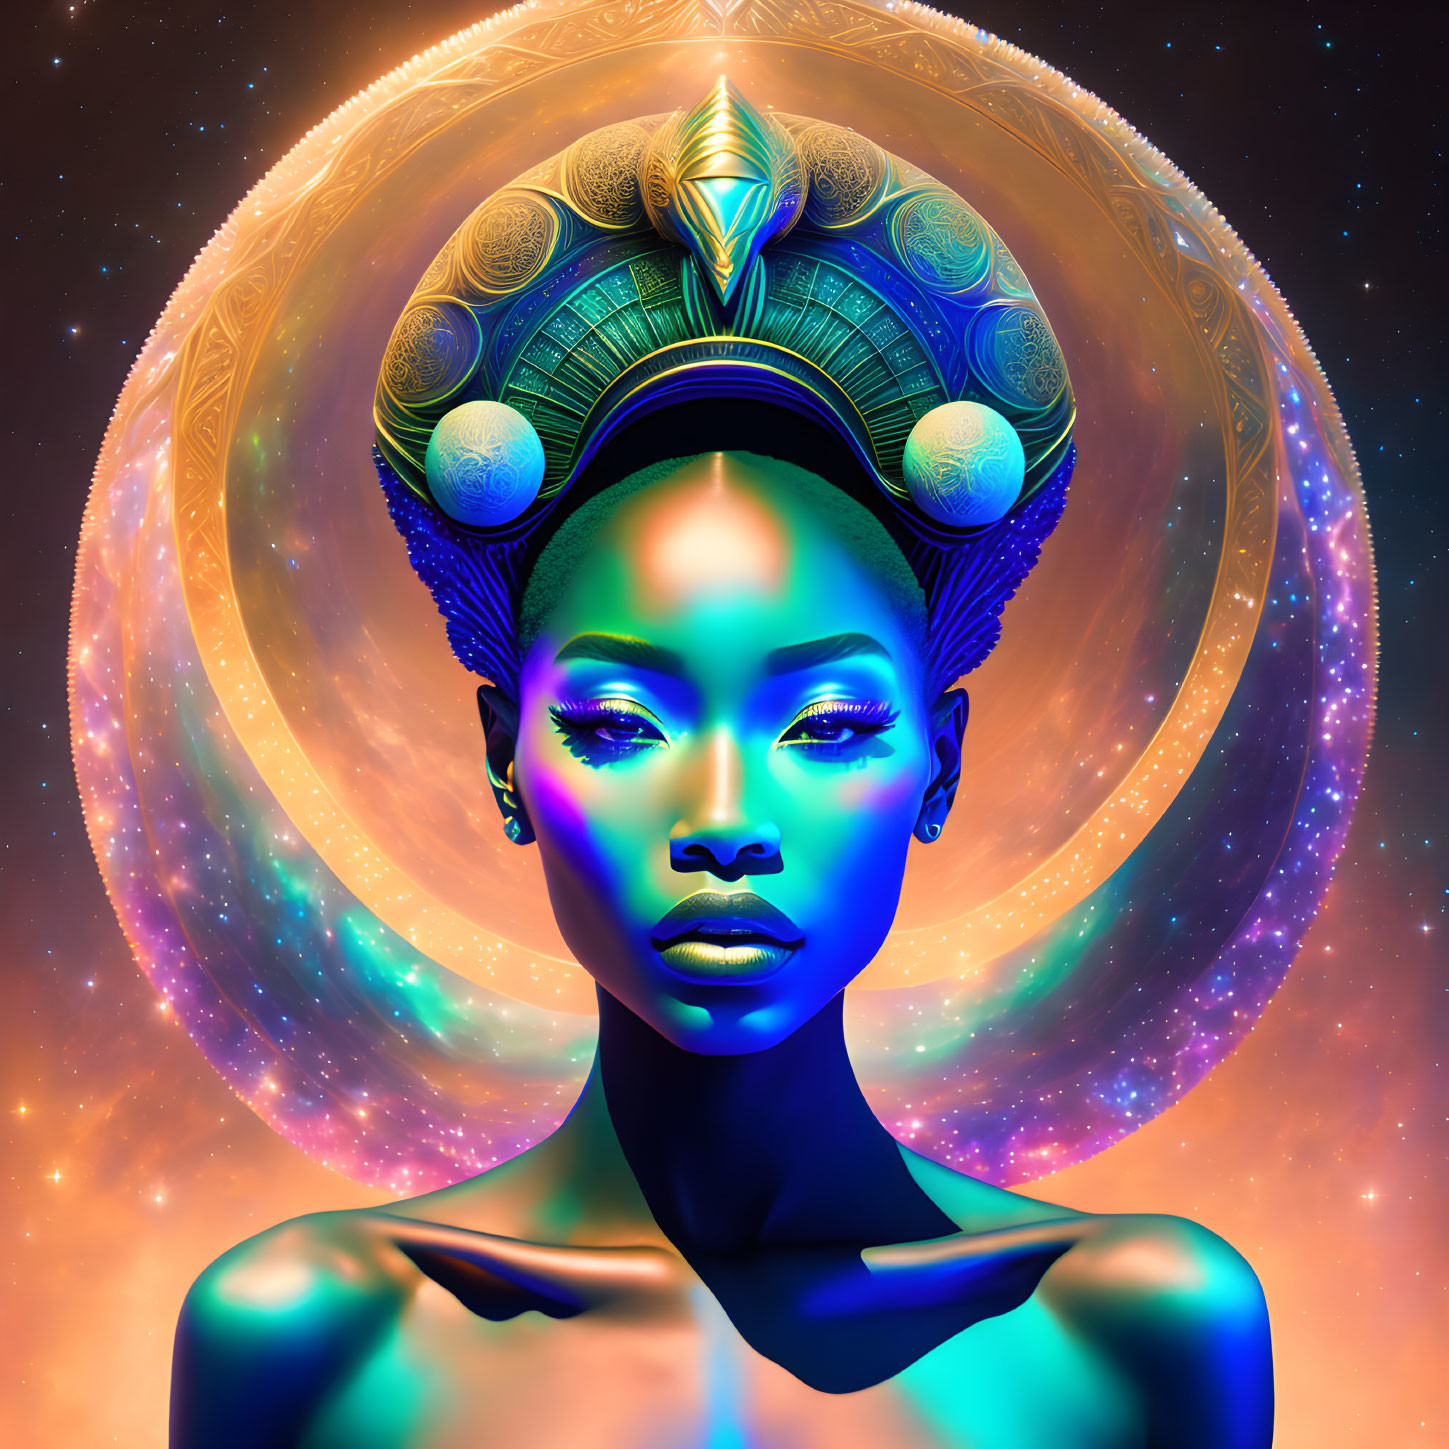 Portrait of an alien goddess